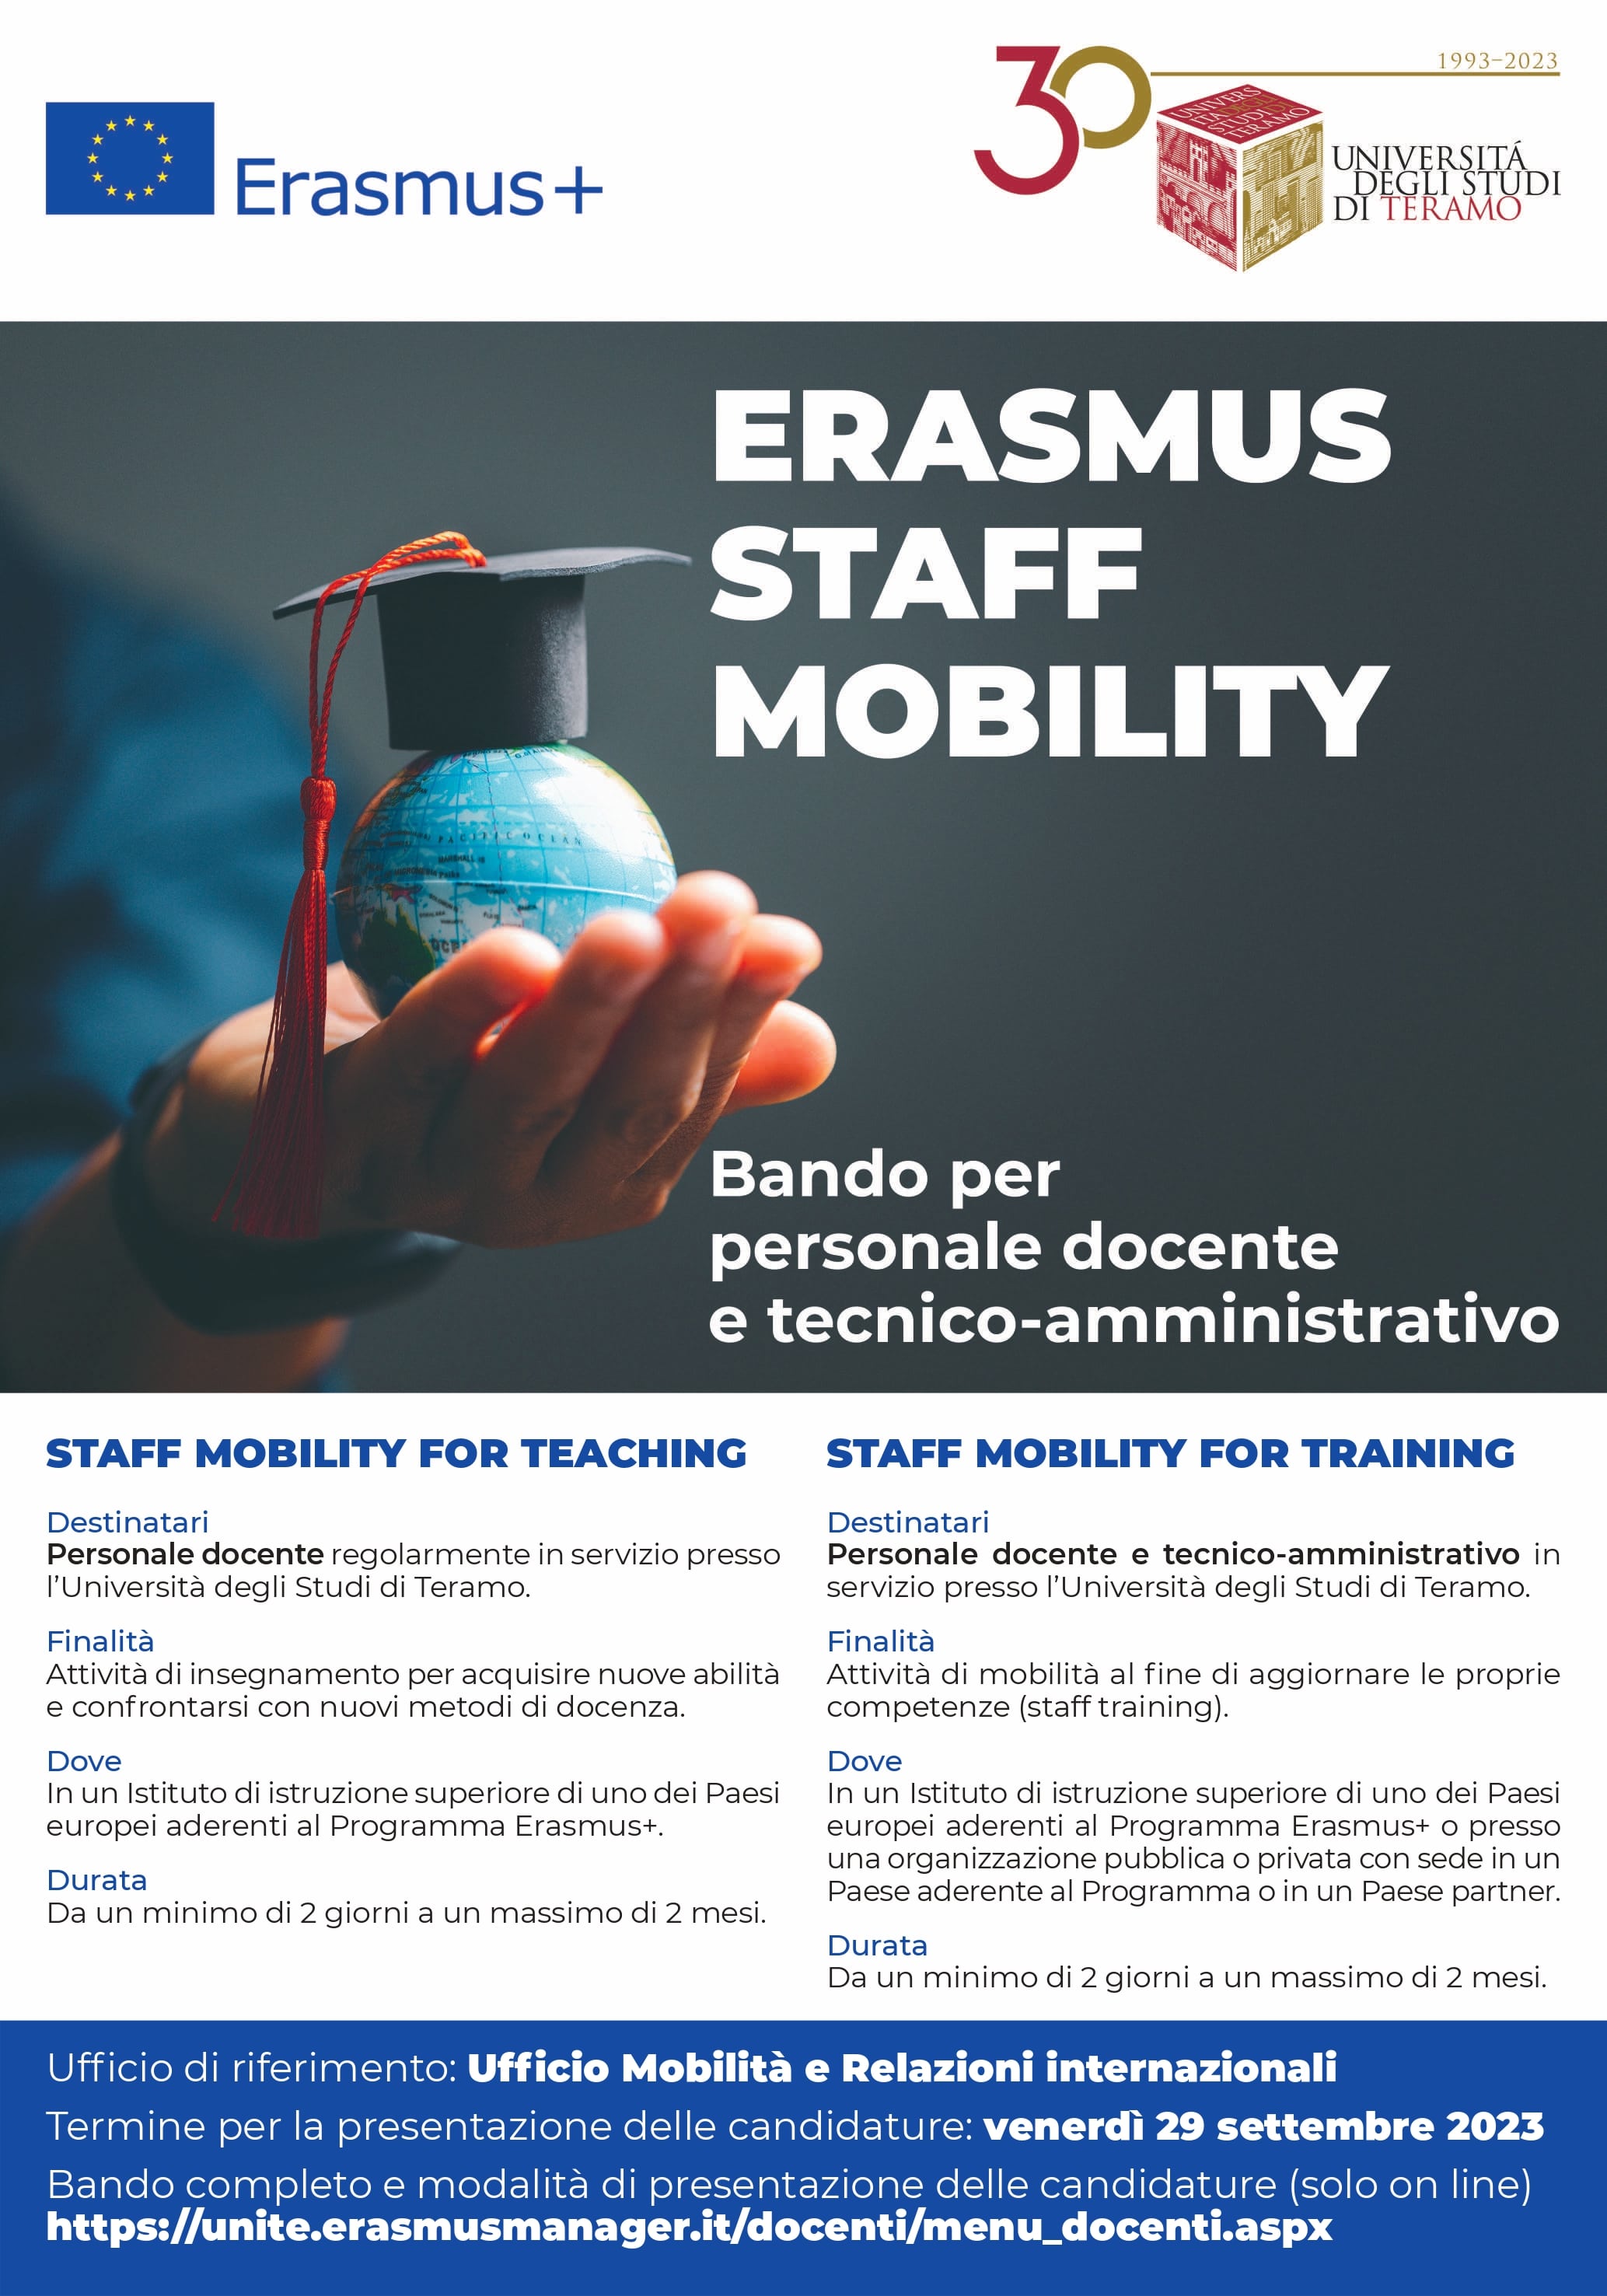 Erasmus staff mobility